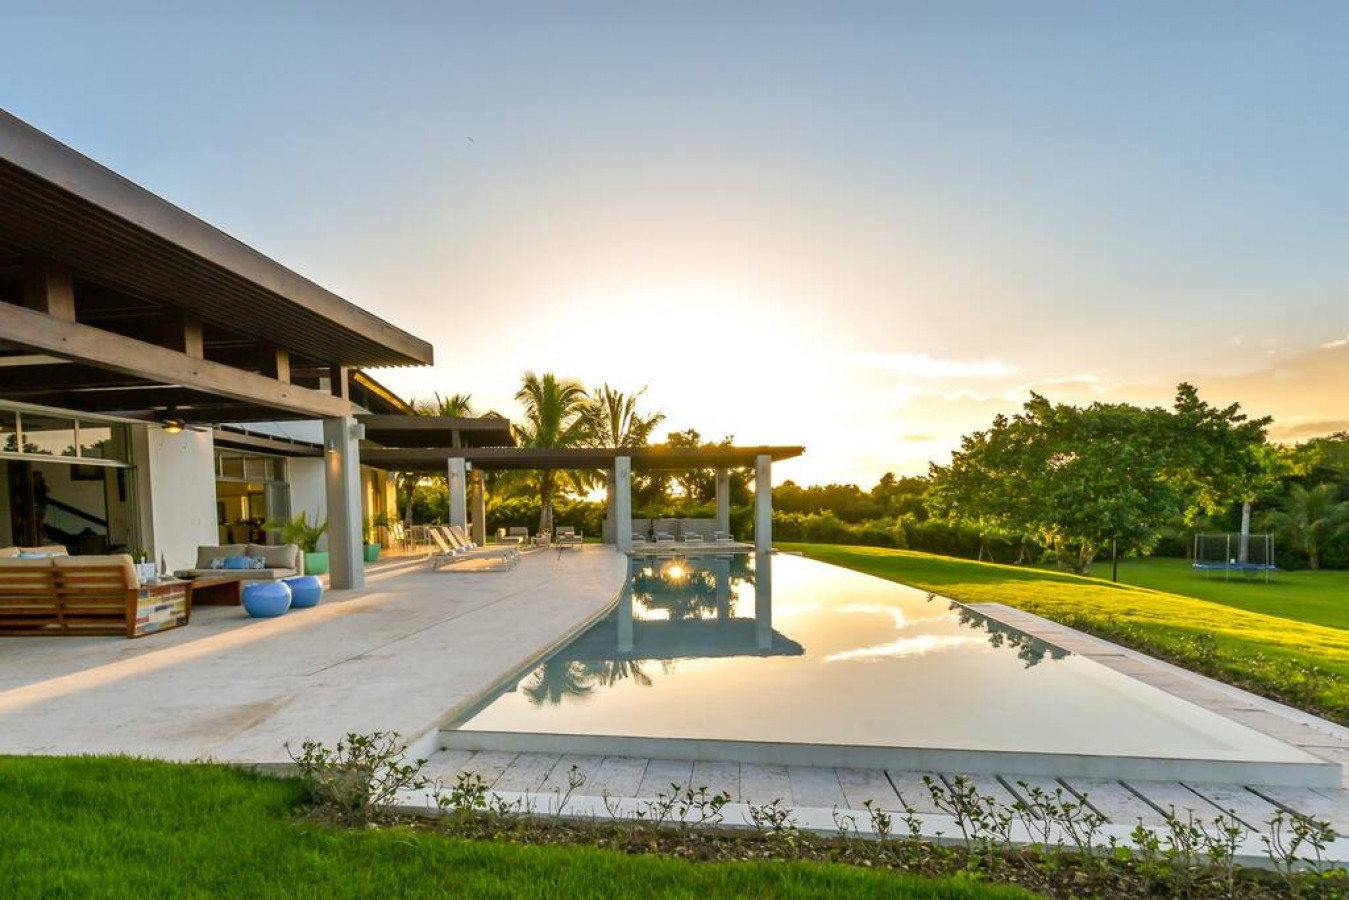 Hermosa: Expansive luxury villa w/ pool, Jacuzzi, lawn, full staff & golf cart. 